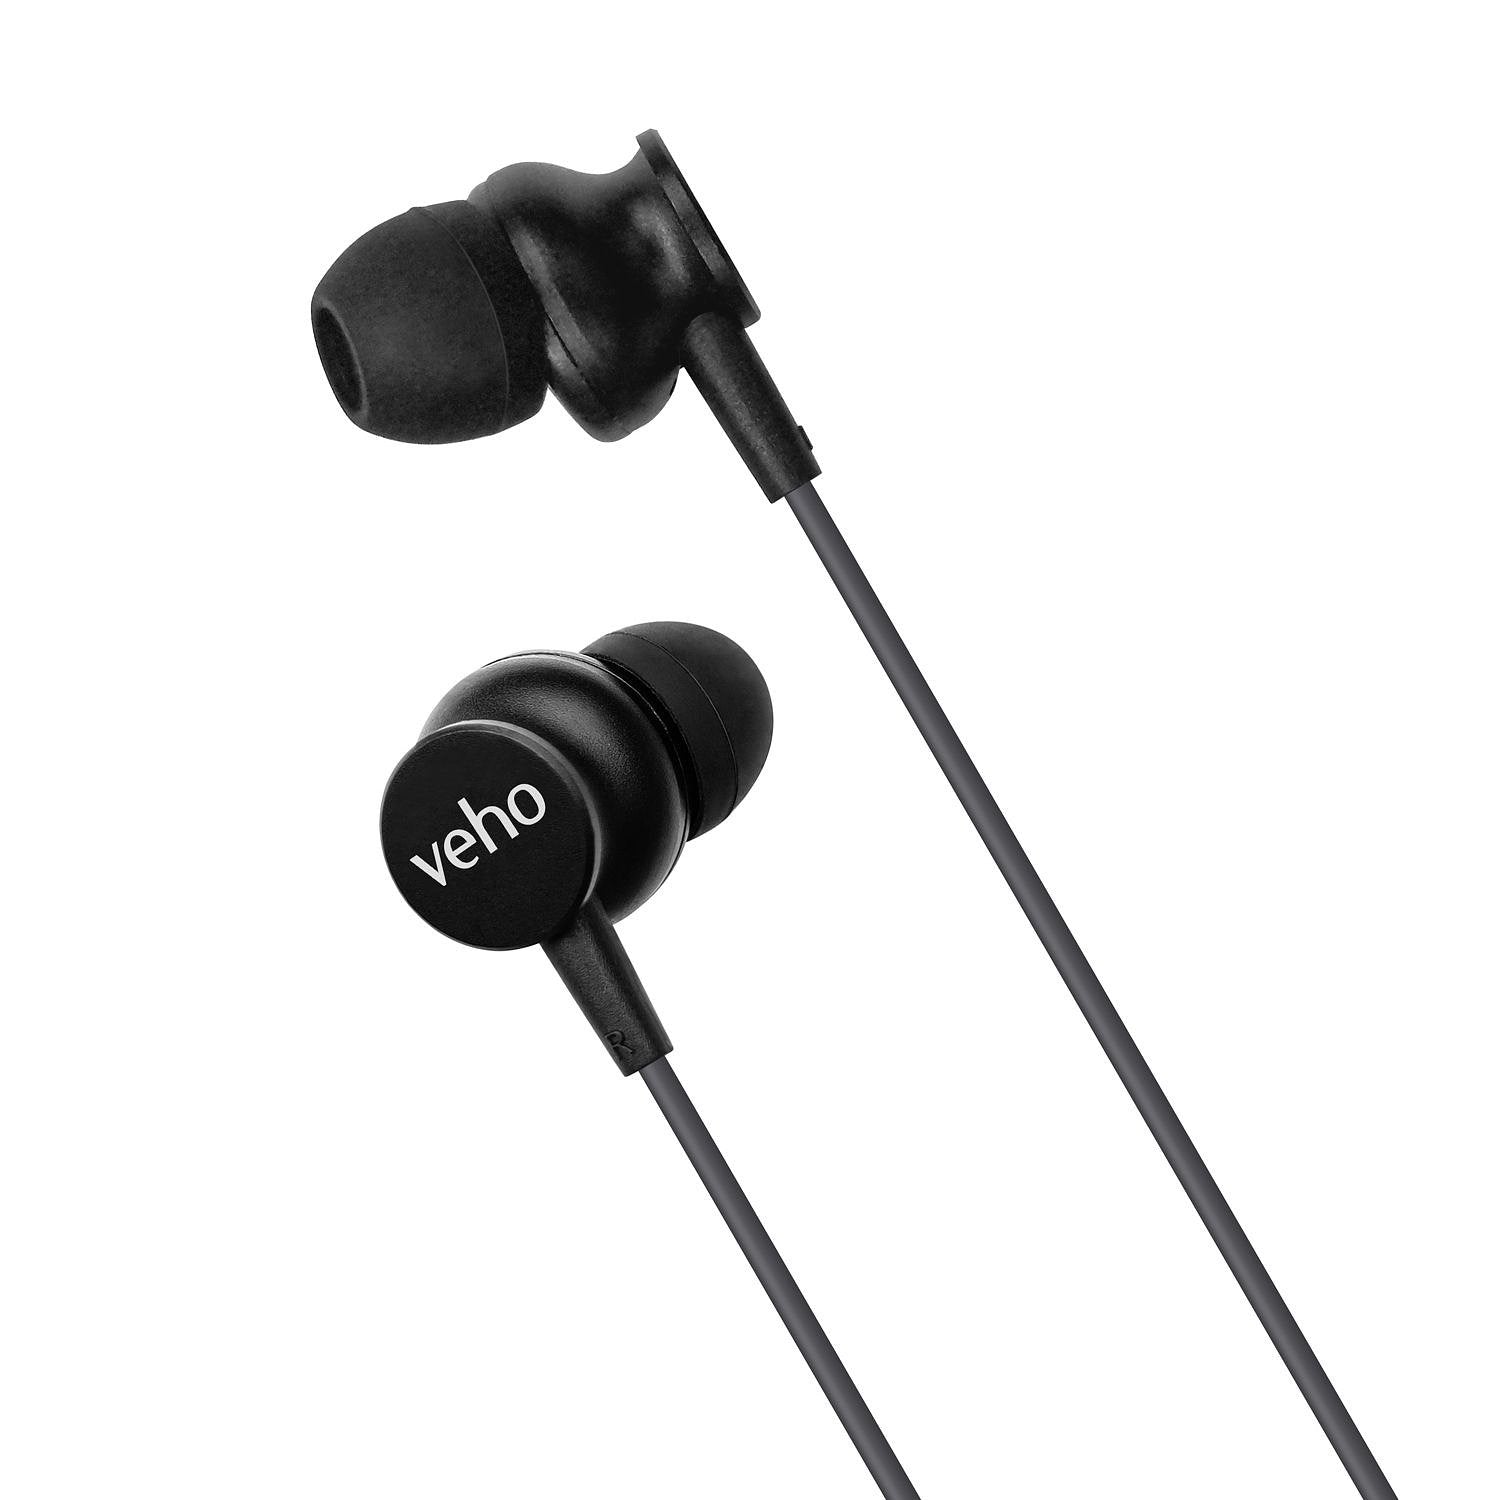 Veho Z3 earphones - grey | VEP-103-Z3-G